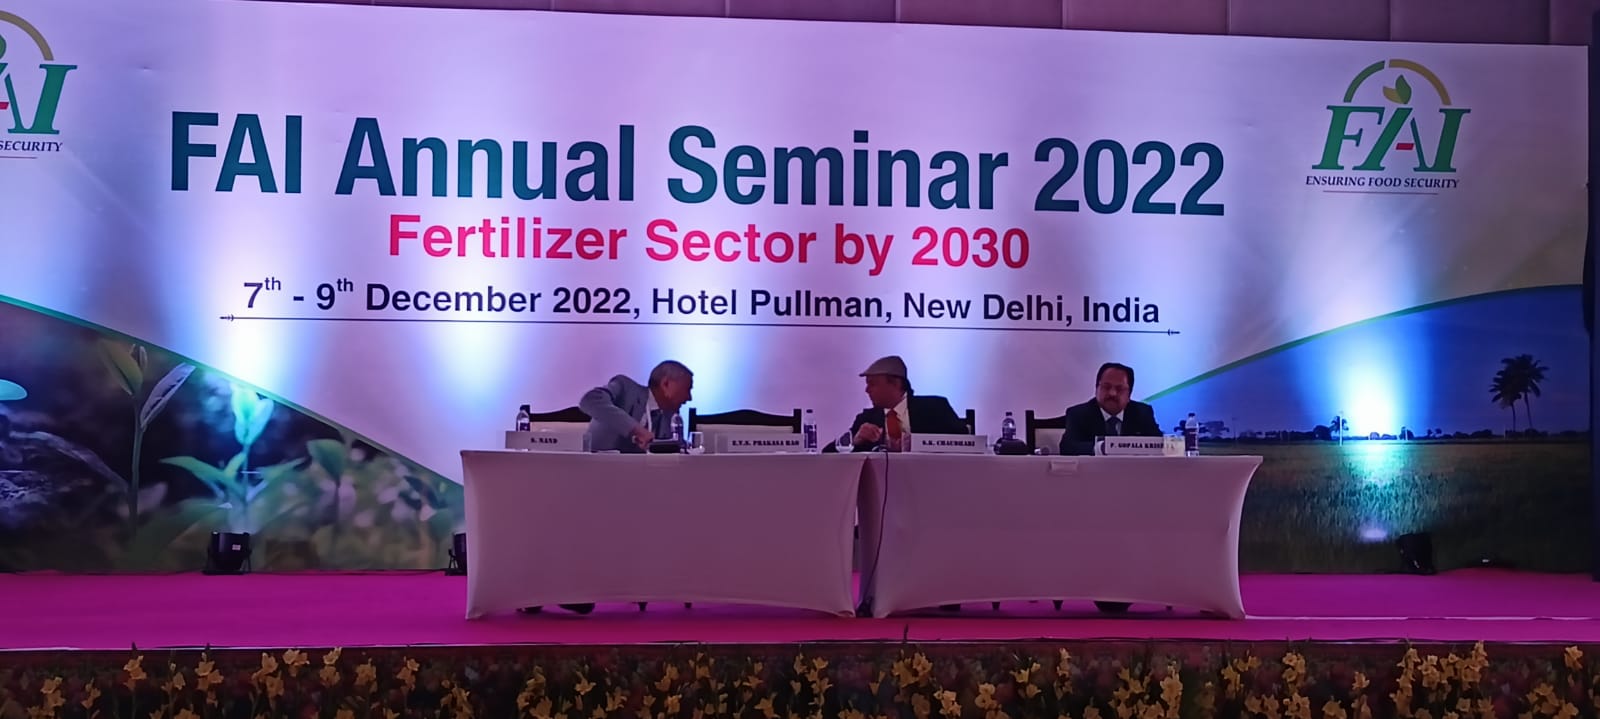 The Fertilizer Association of India